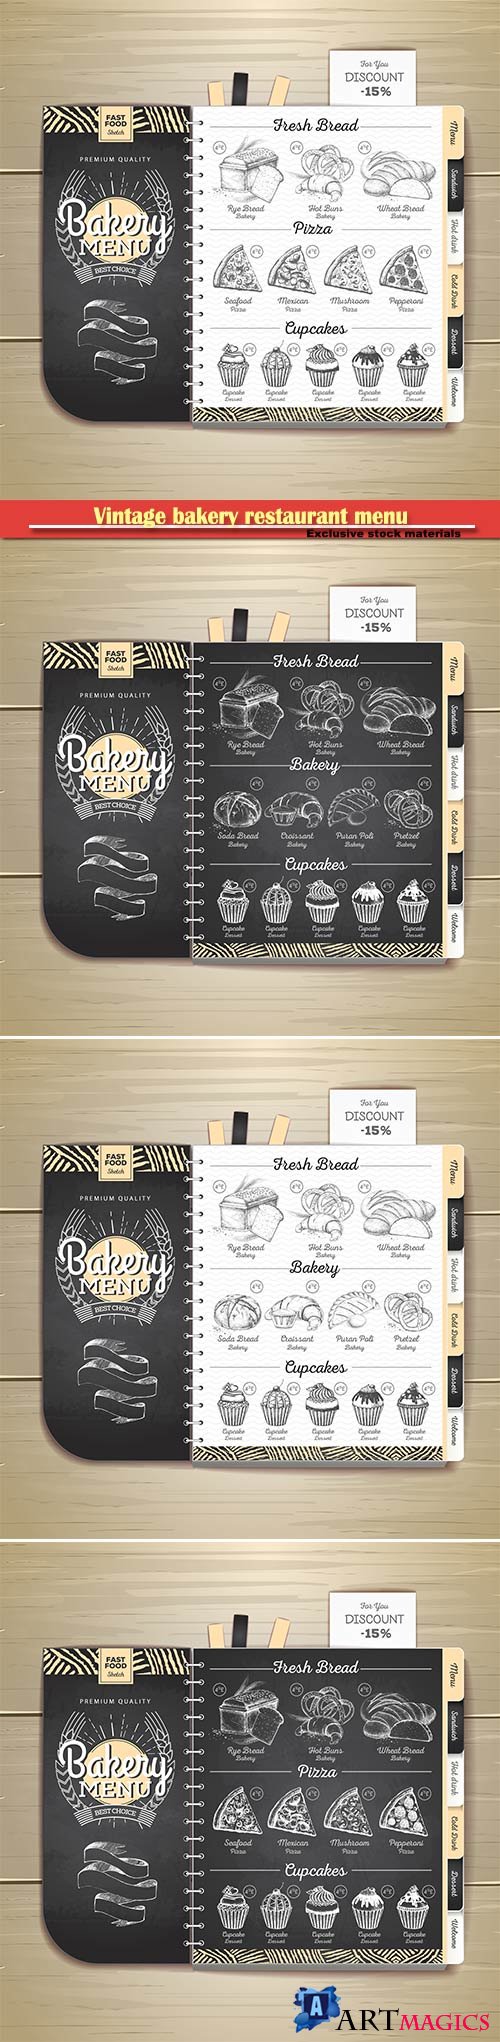 Vintage chalk drawing bakery restaurant menu design  vector illustration